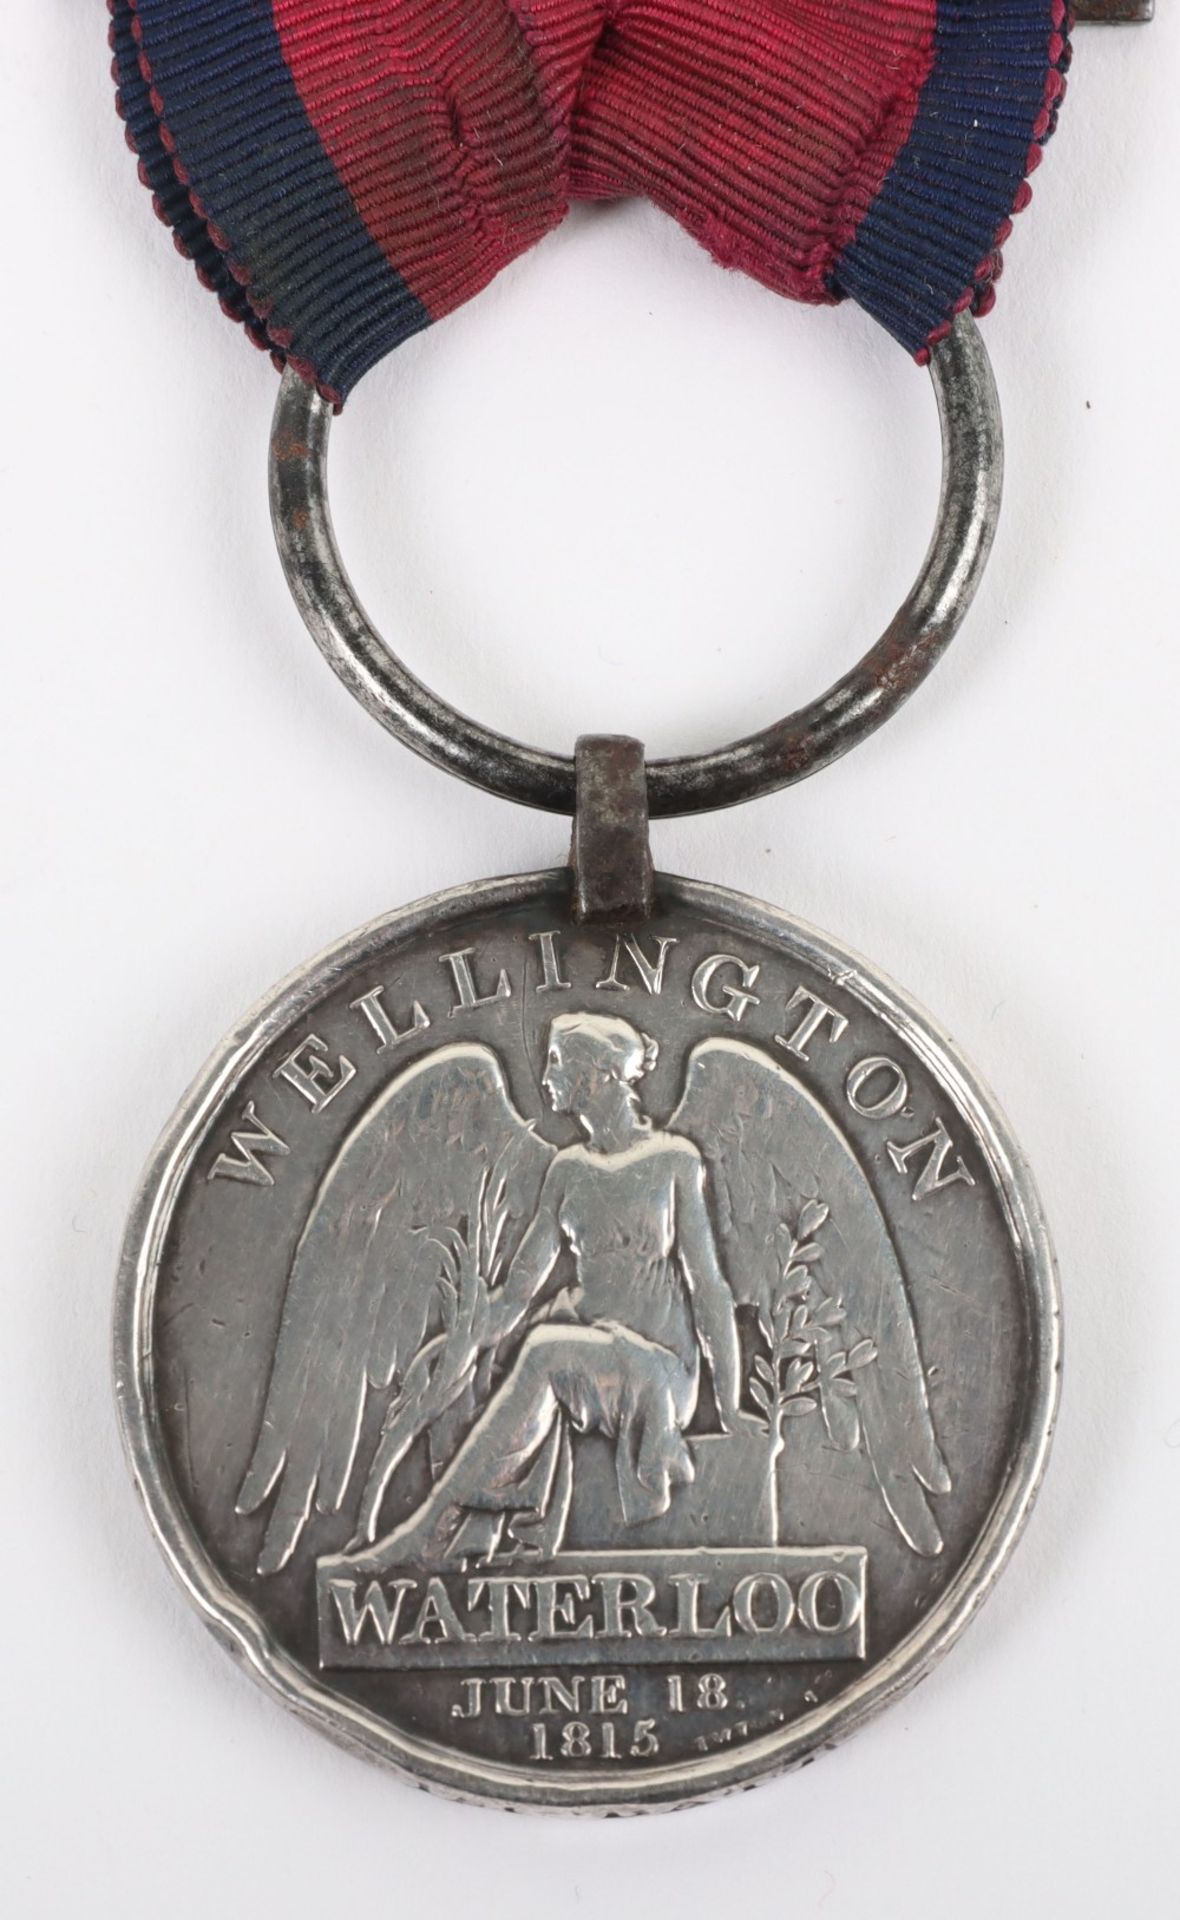 British 1815 Waterloo Medal 4th or Kings Own Regiment of Foot - Image 5 of 5